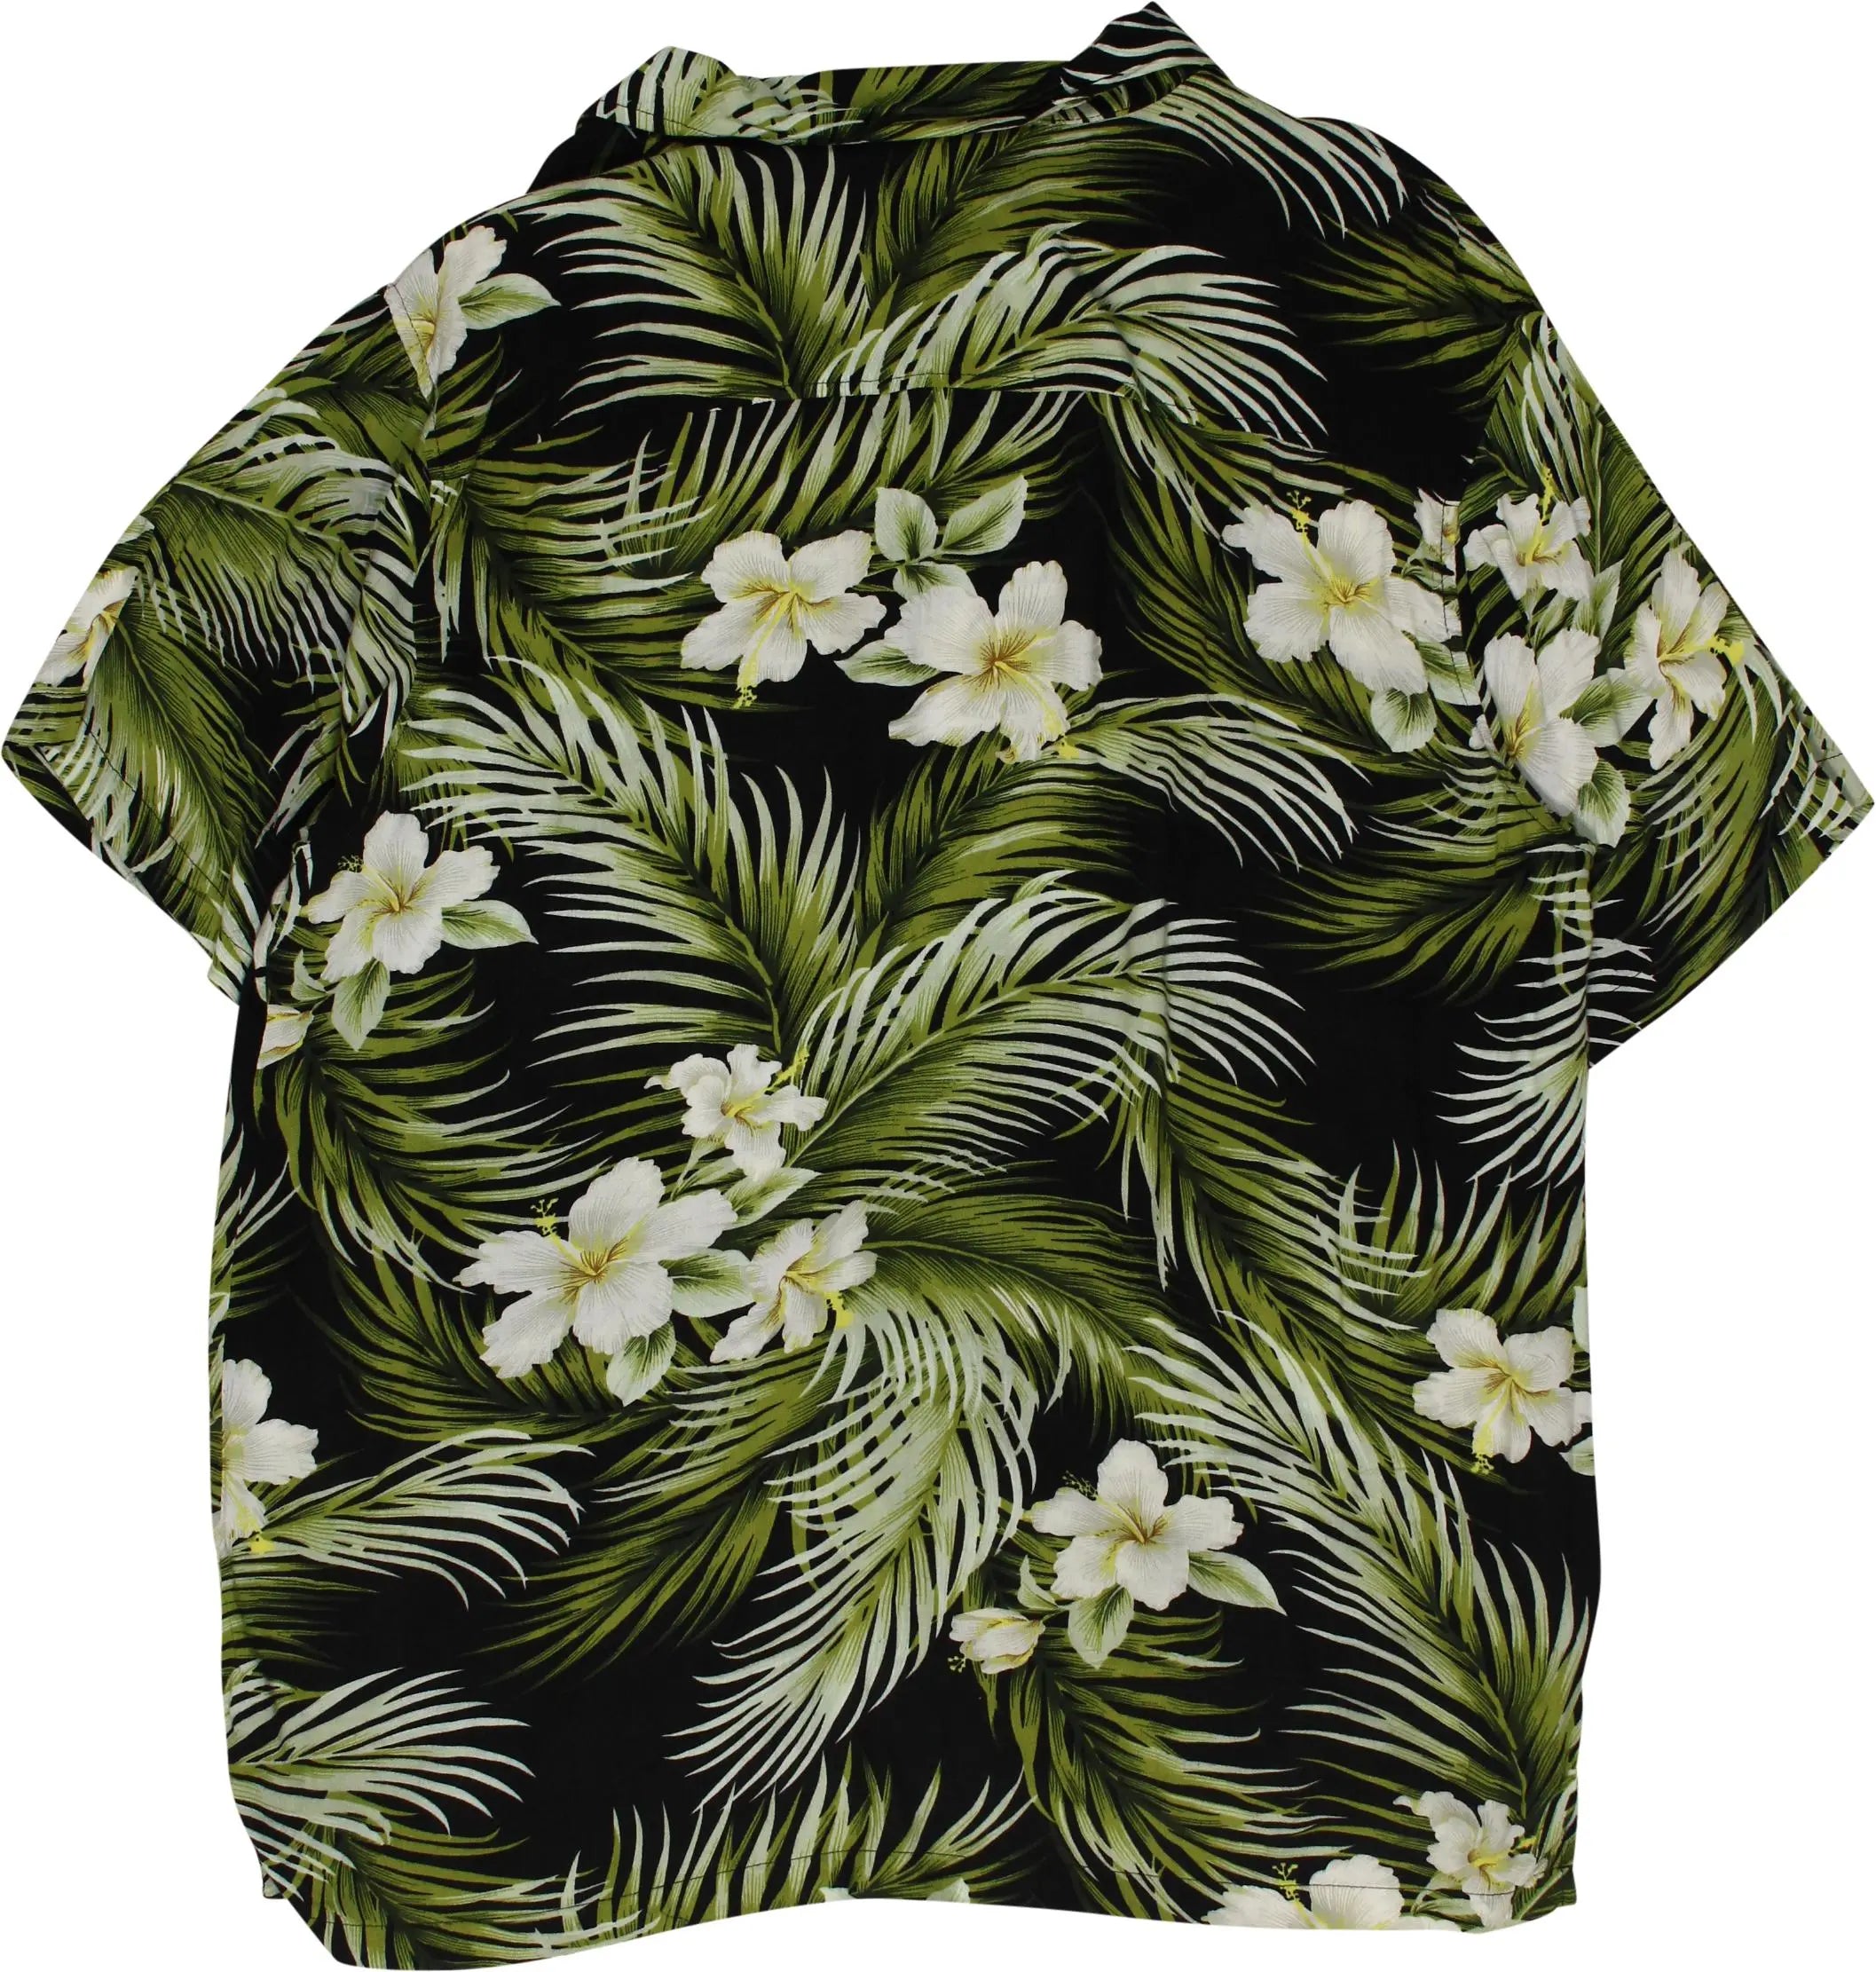 Mauro Ferrini - Hawaiian Shirt- ThriftTale.com - Vintage and second handclothing